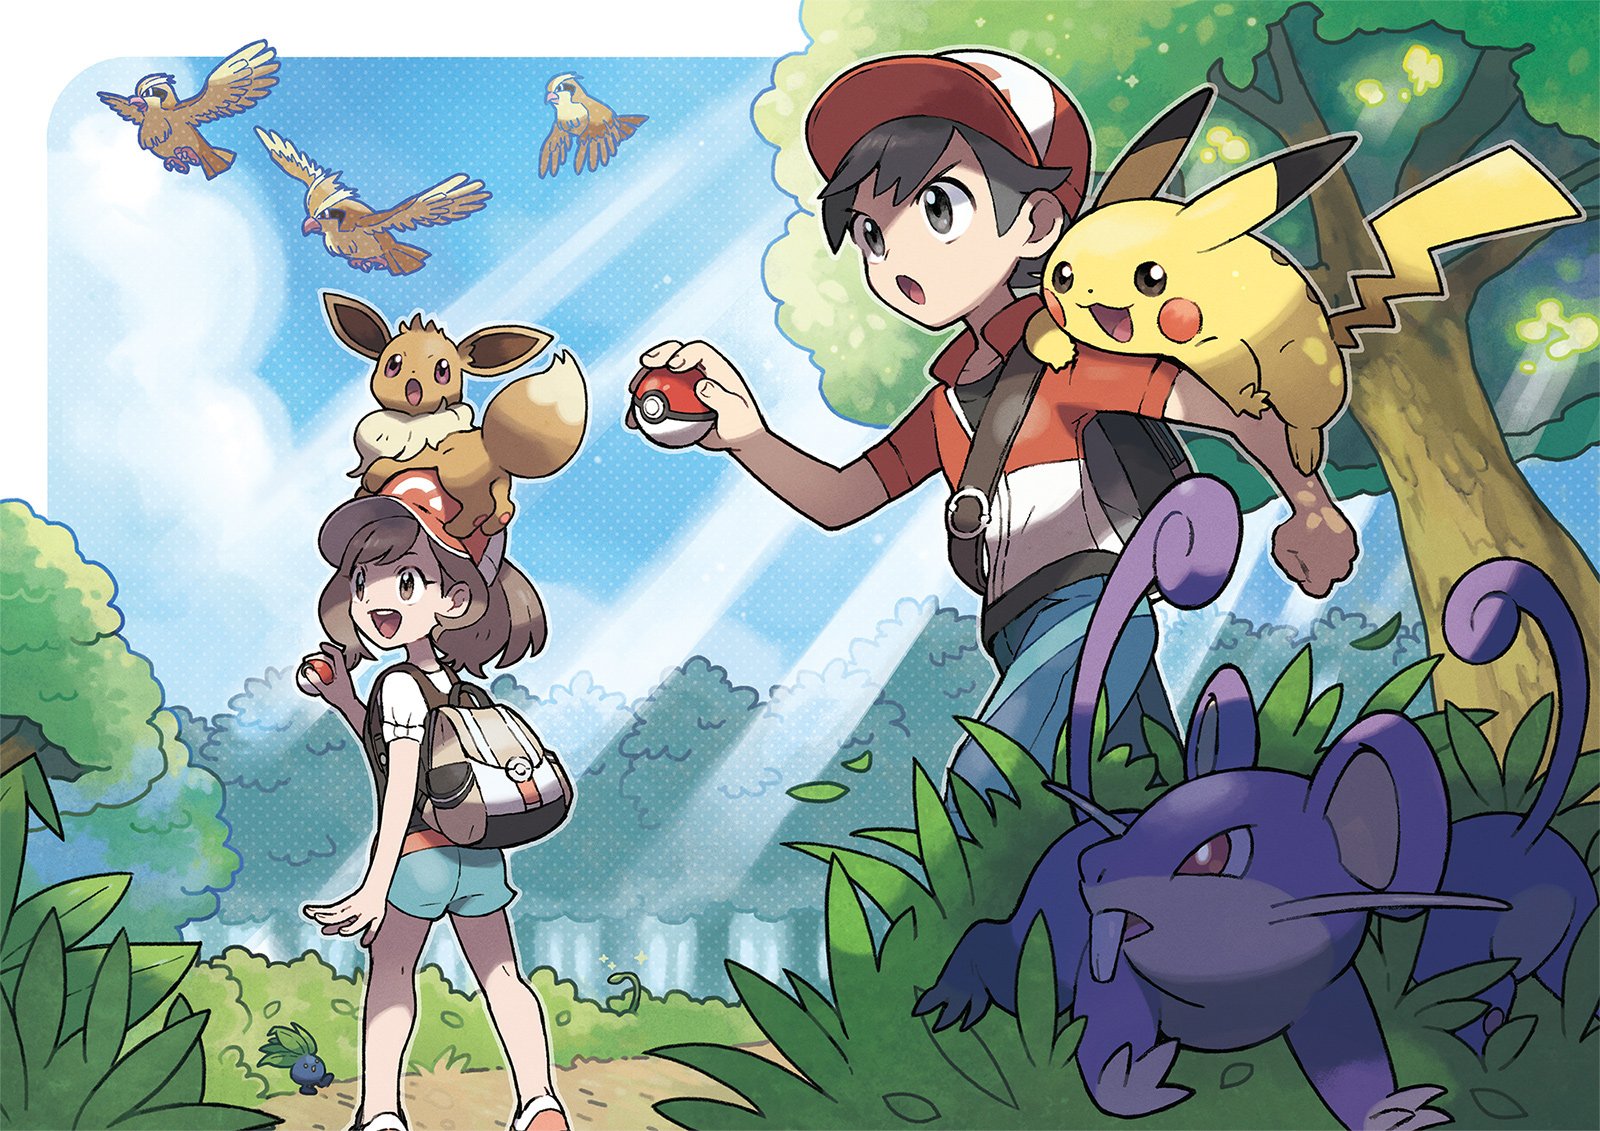 Pokémon Let's Go, Pikachu & Let's Go, Eevee - Shiny Pokémon